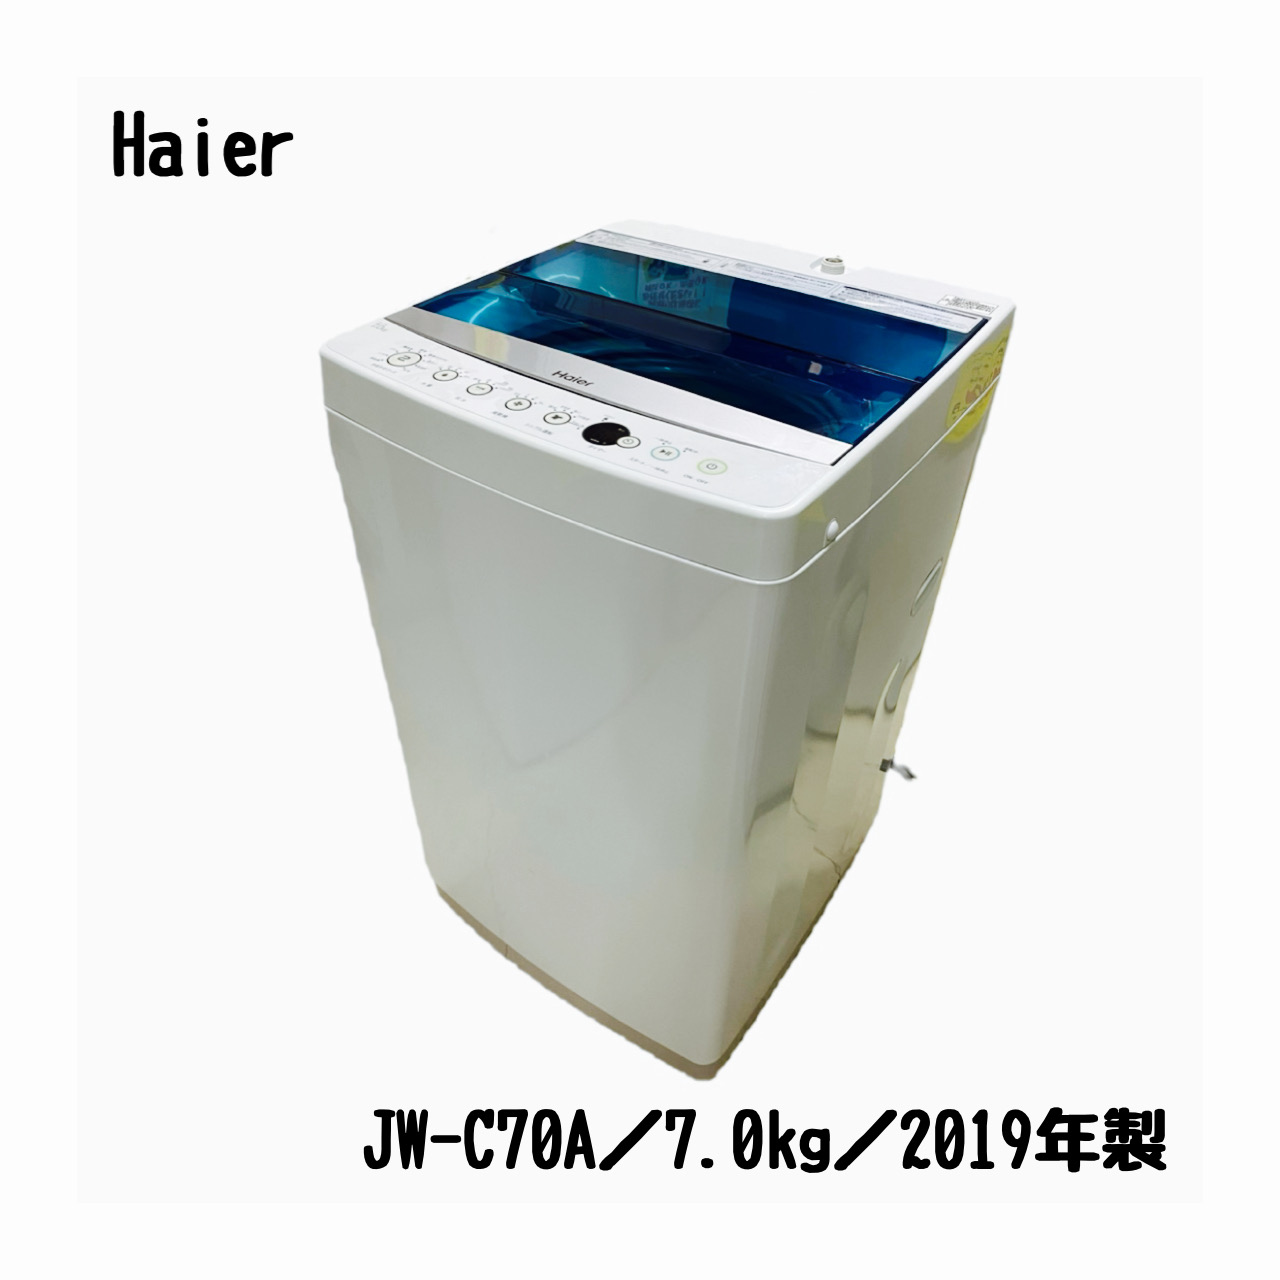 Haier】 ハイアール 全自動洗濯機 JW-K70NE-W 7.0kg 2017年製. - 生活家電